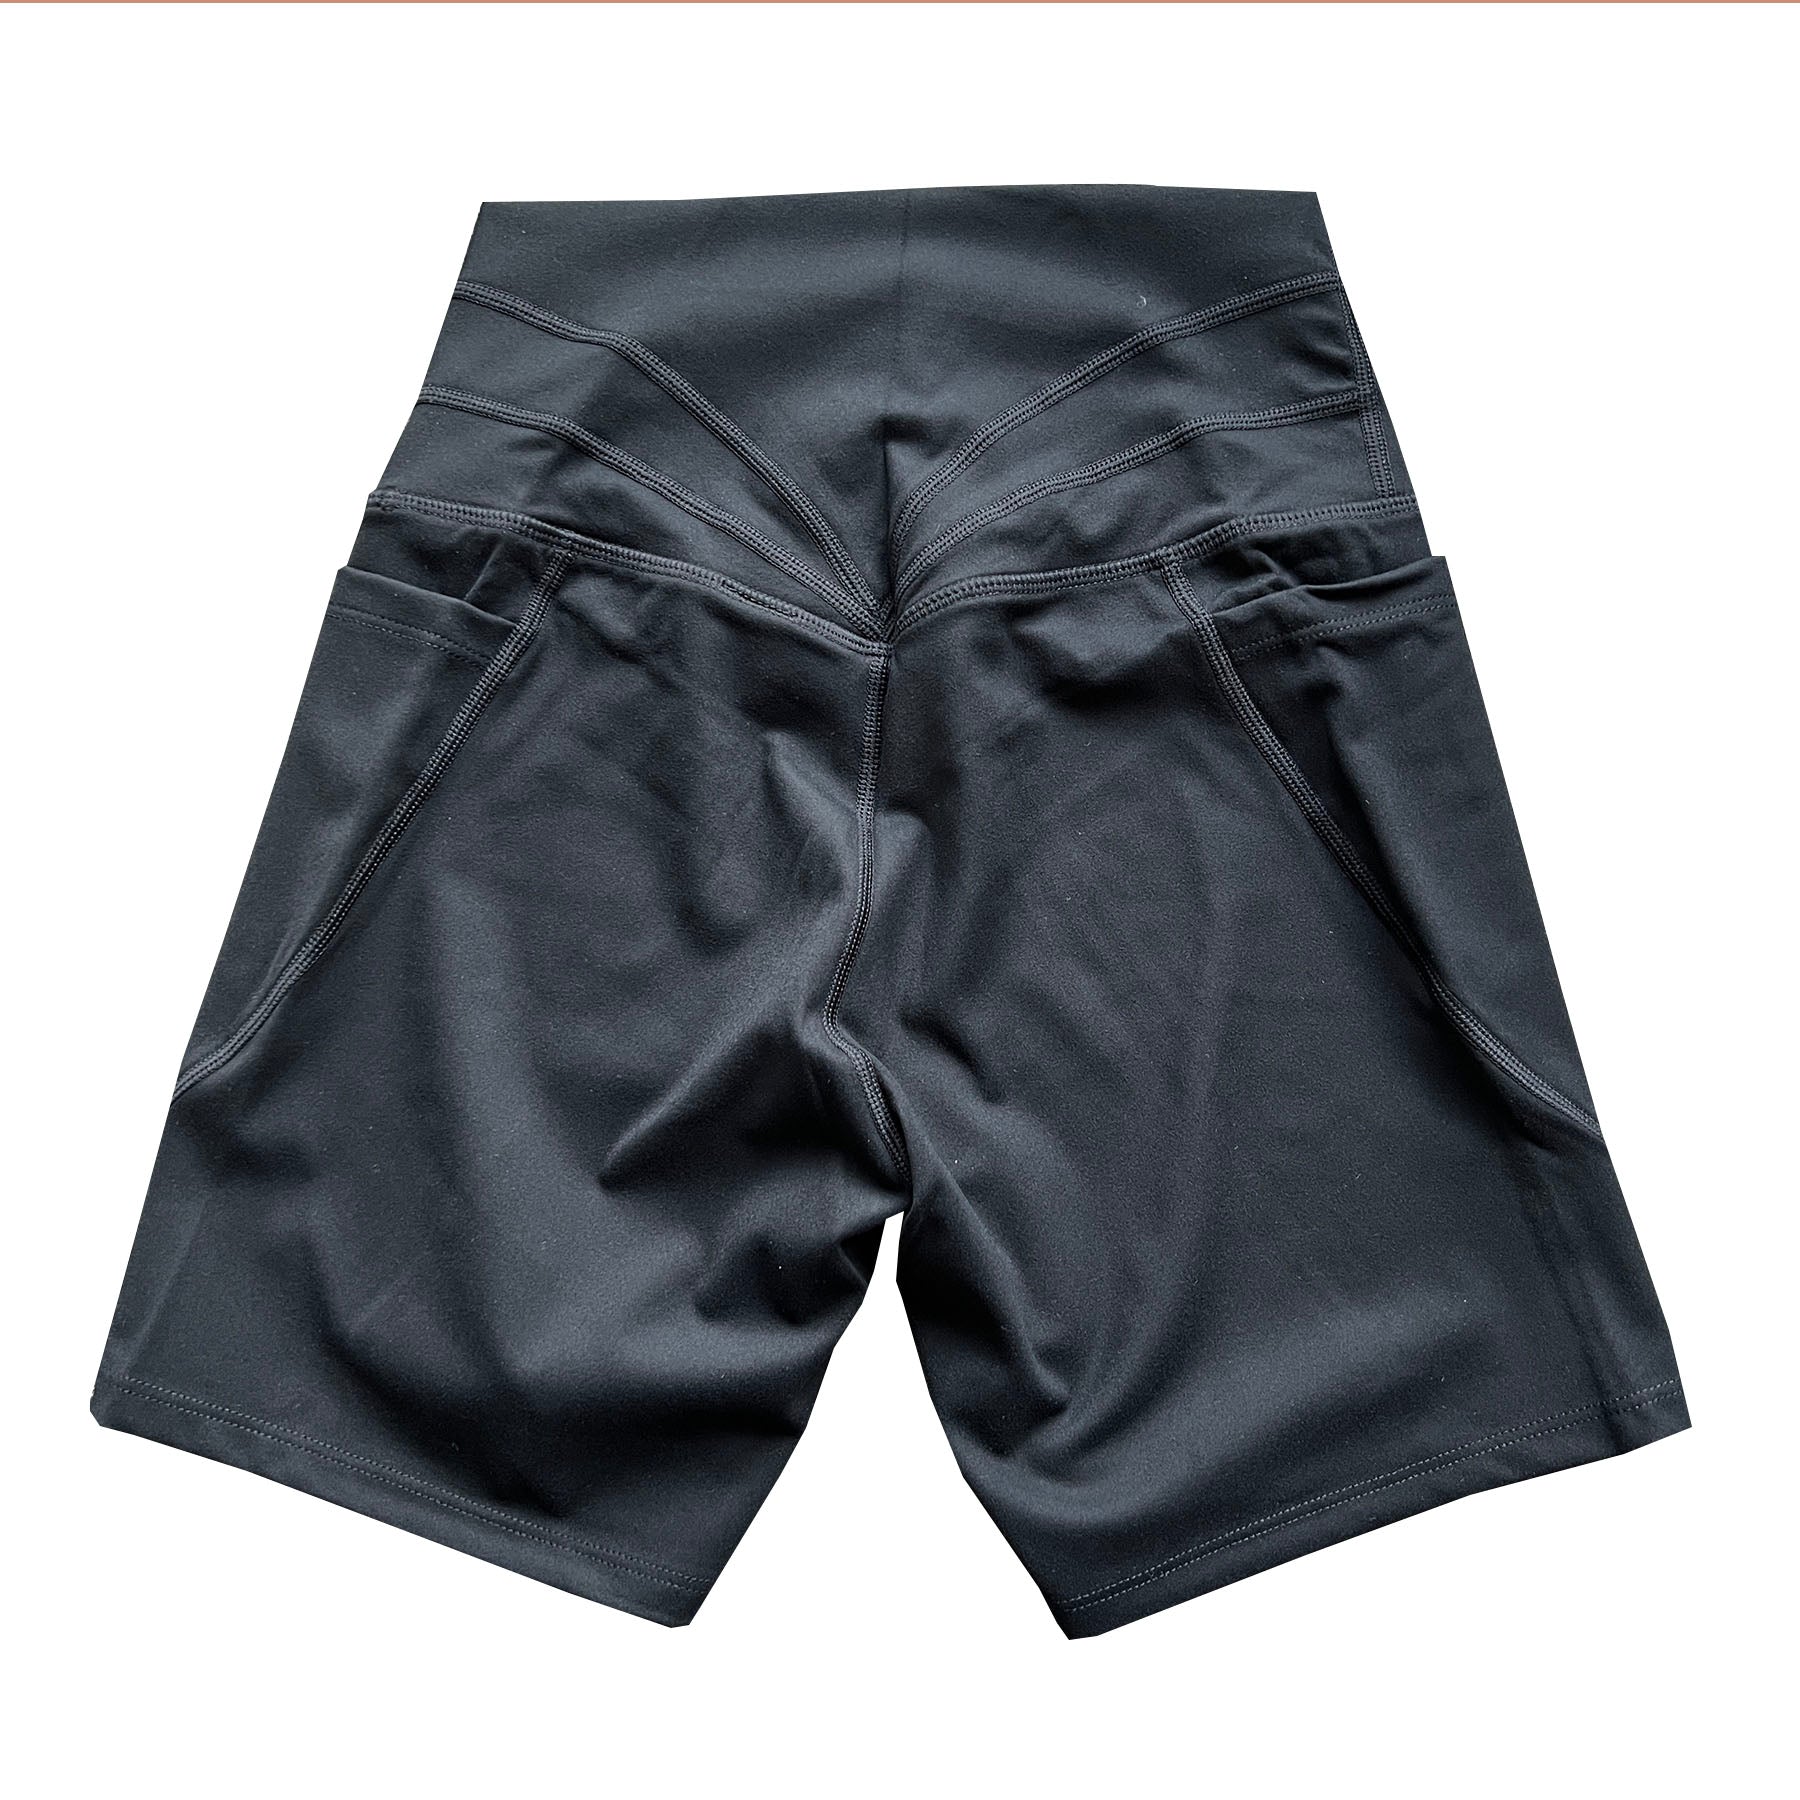 Aoxjox 3 Waist Seam Side Pocket Shorts